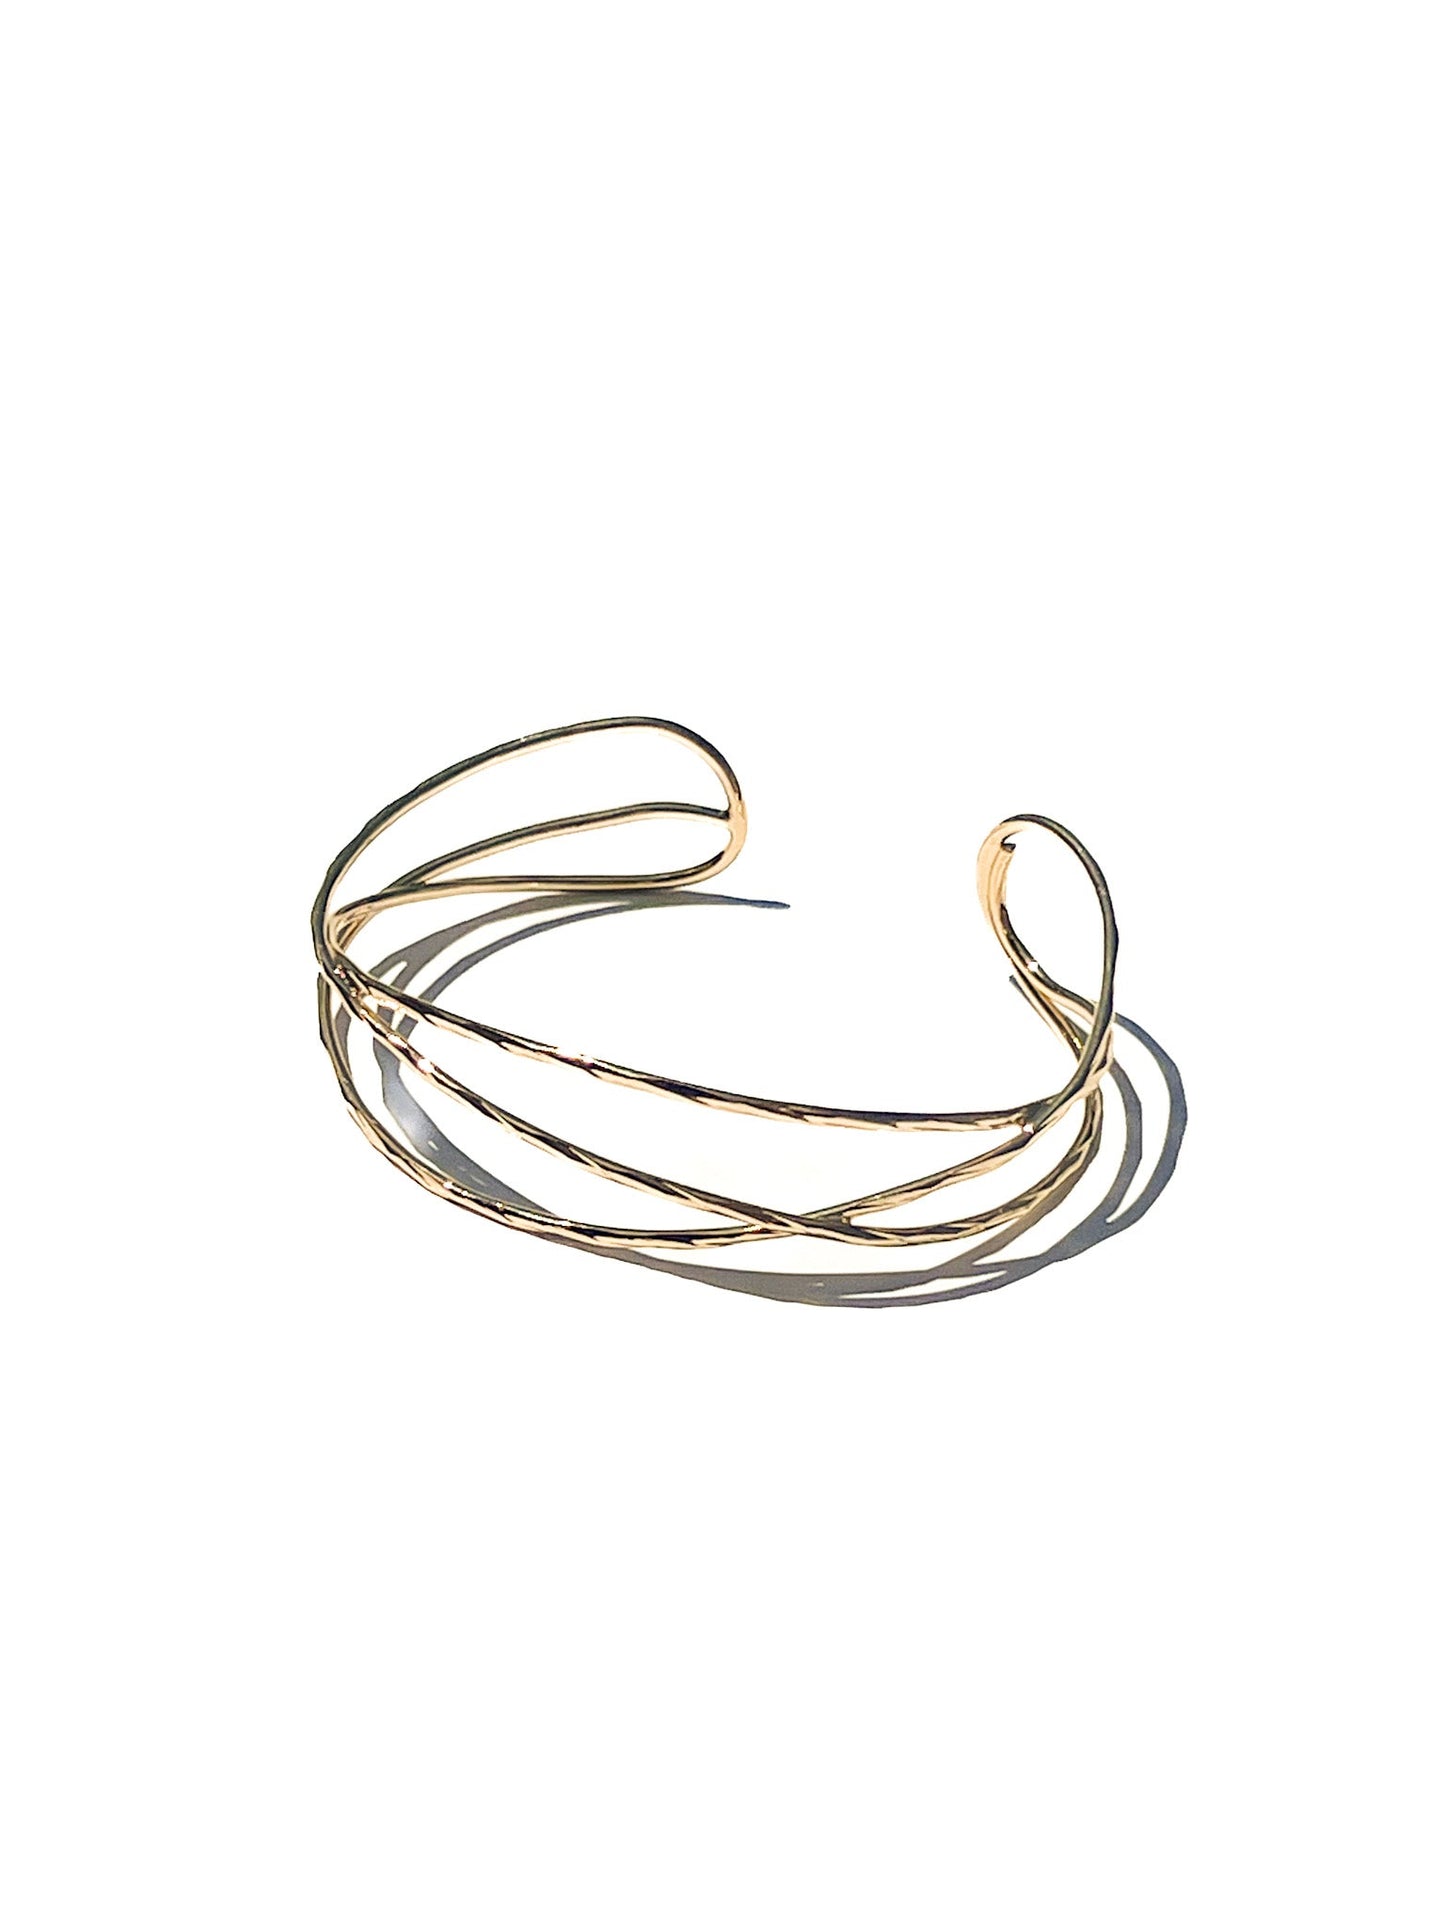 Intertwined Gold Cuff Bracelet